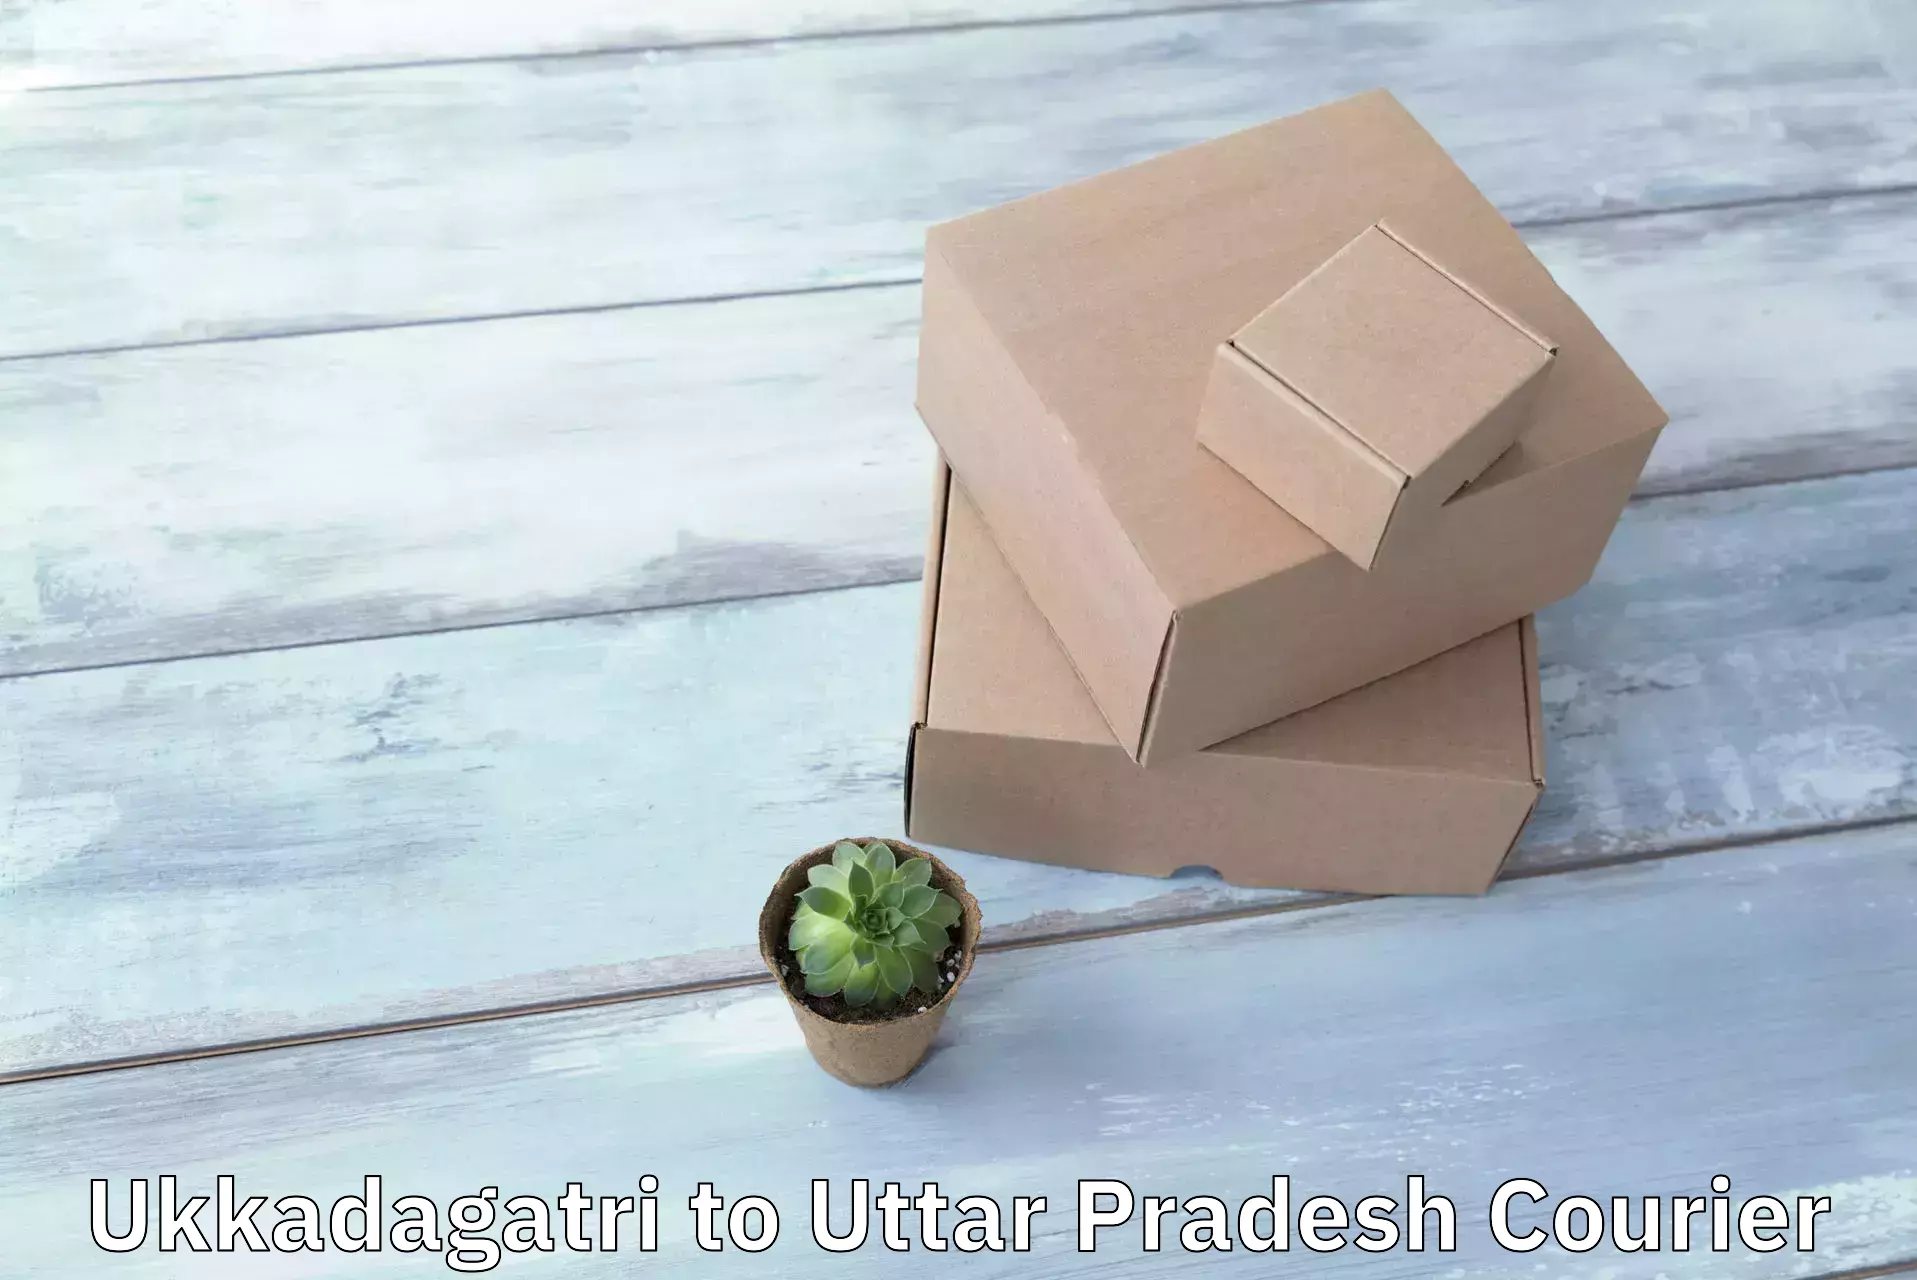 Enhanced tracking features Ukkadagatri to Uttar Pradesh